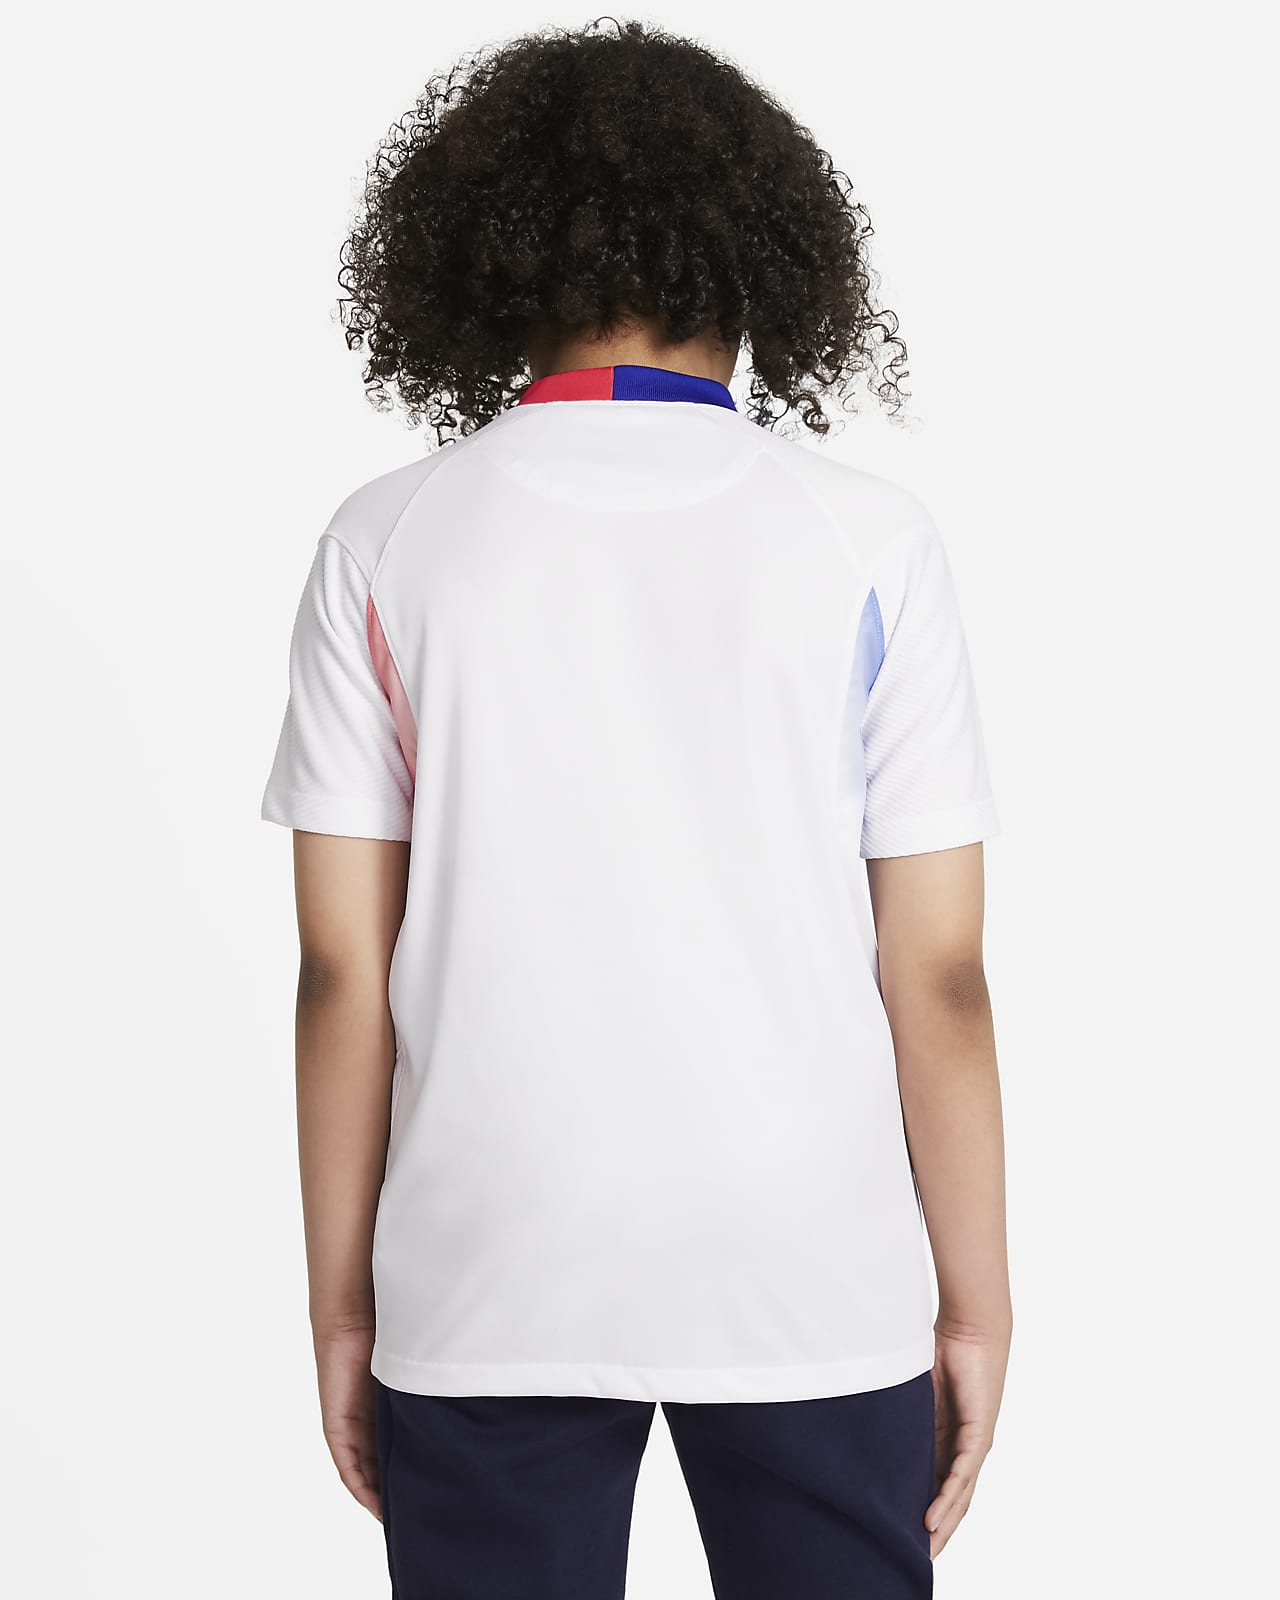 Detener descanso Soleado Stadium Air Max Chelsea FC Camiseta de fútbol - Niño/a. Nike ES